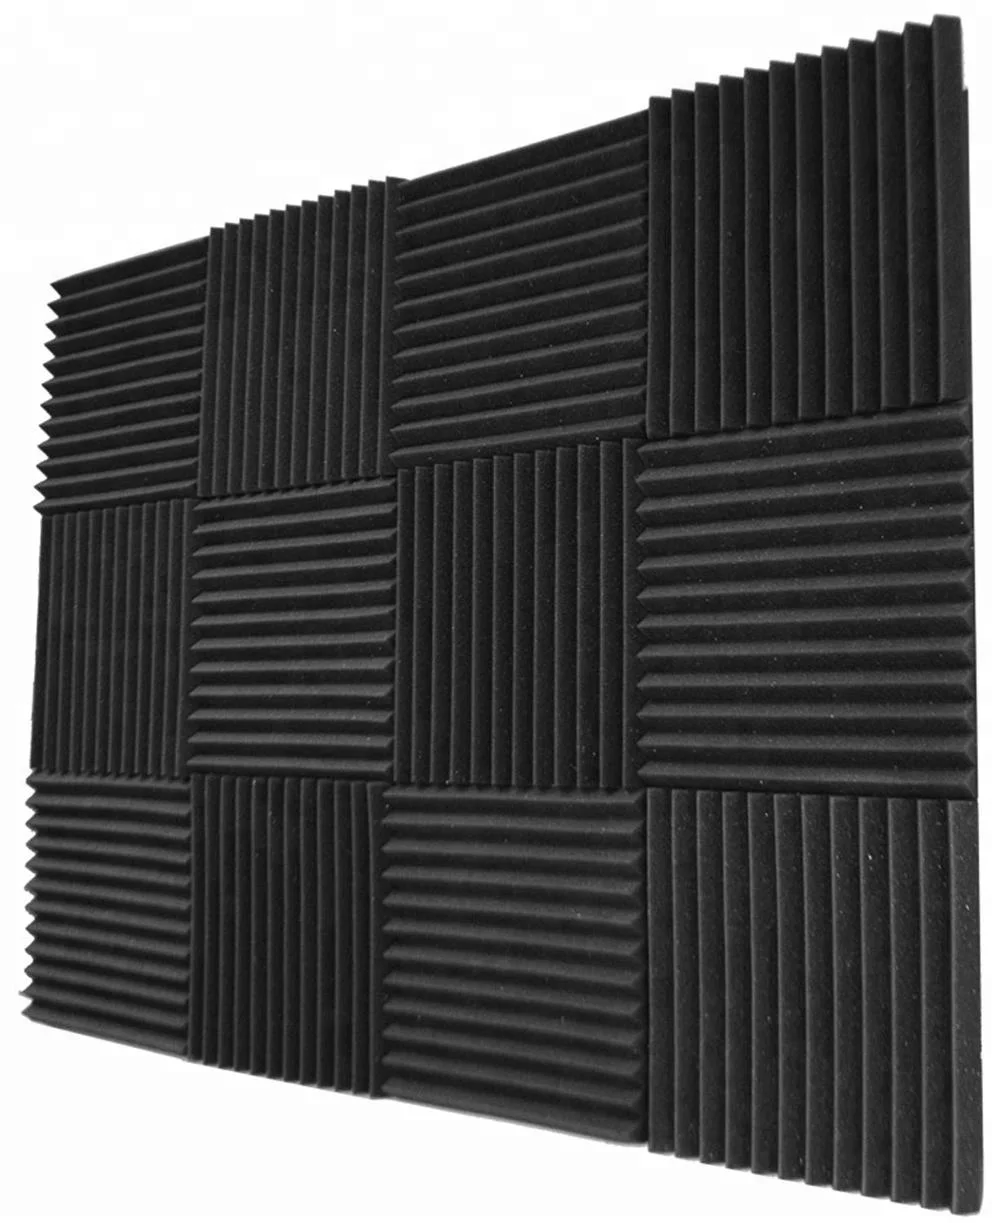 Bonno Acoustic Panels Soundproofing Studio Foam Wedges Acoustic Wall